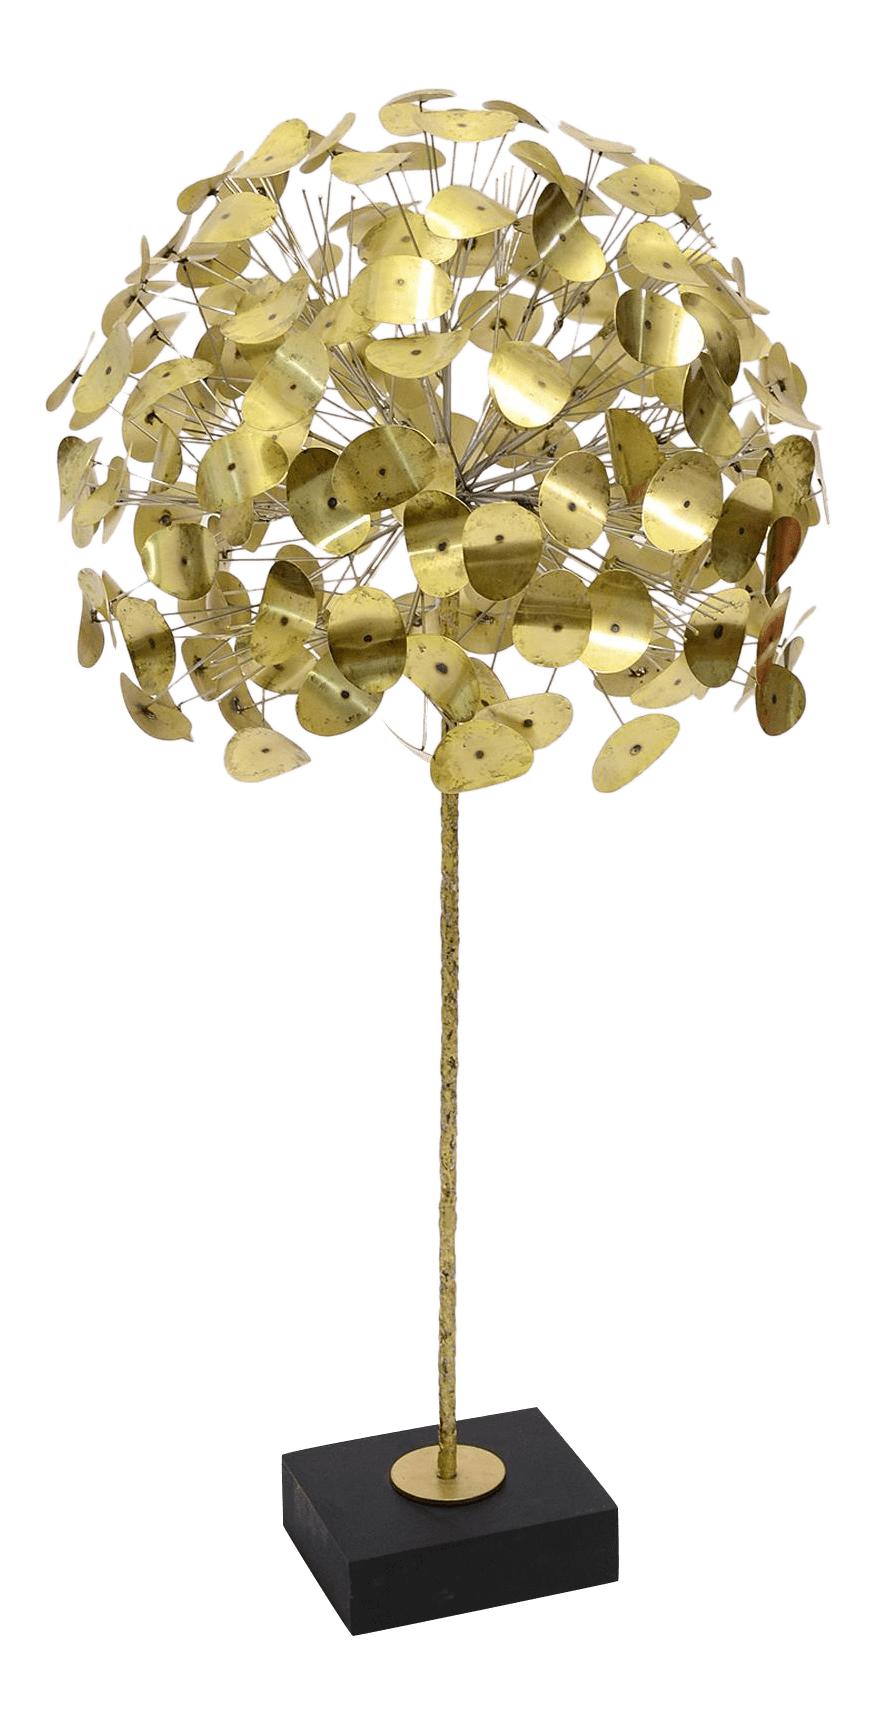 Brutalist lifesize dandelion brass sculpture created by Curtis Jere.